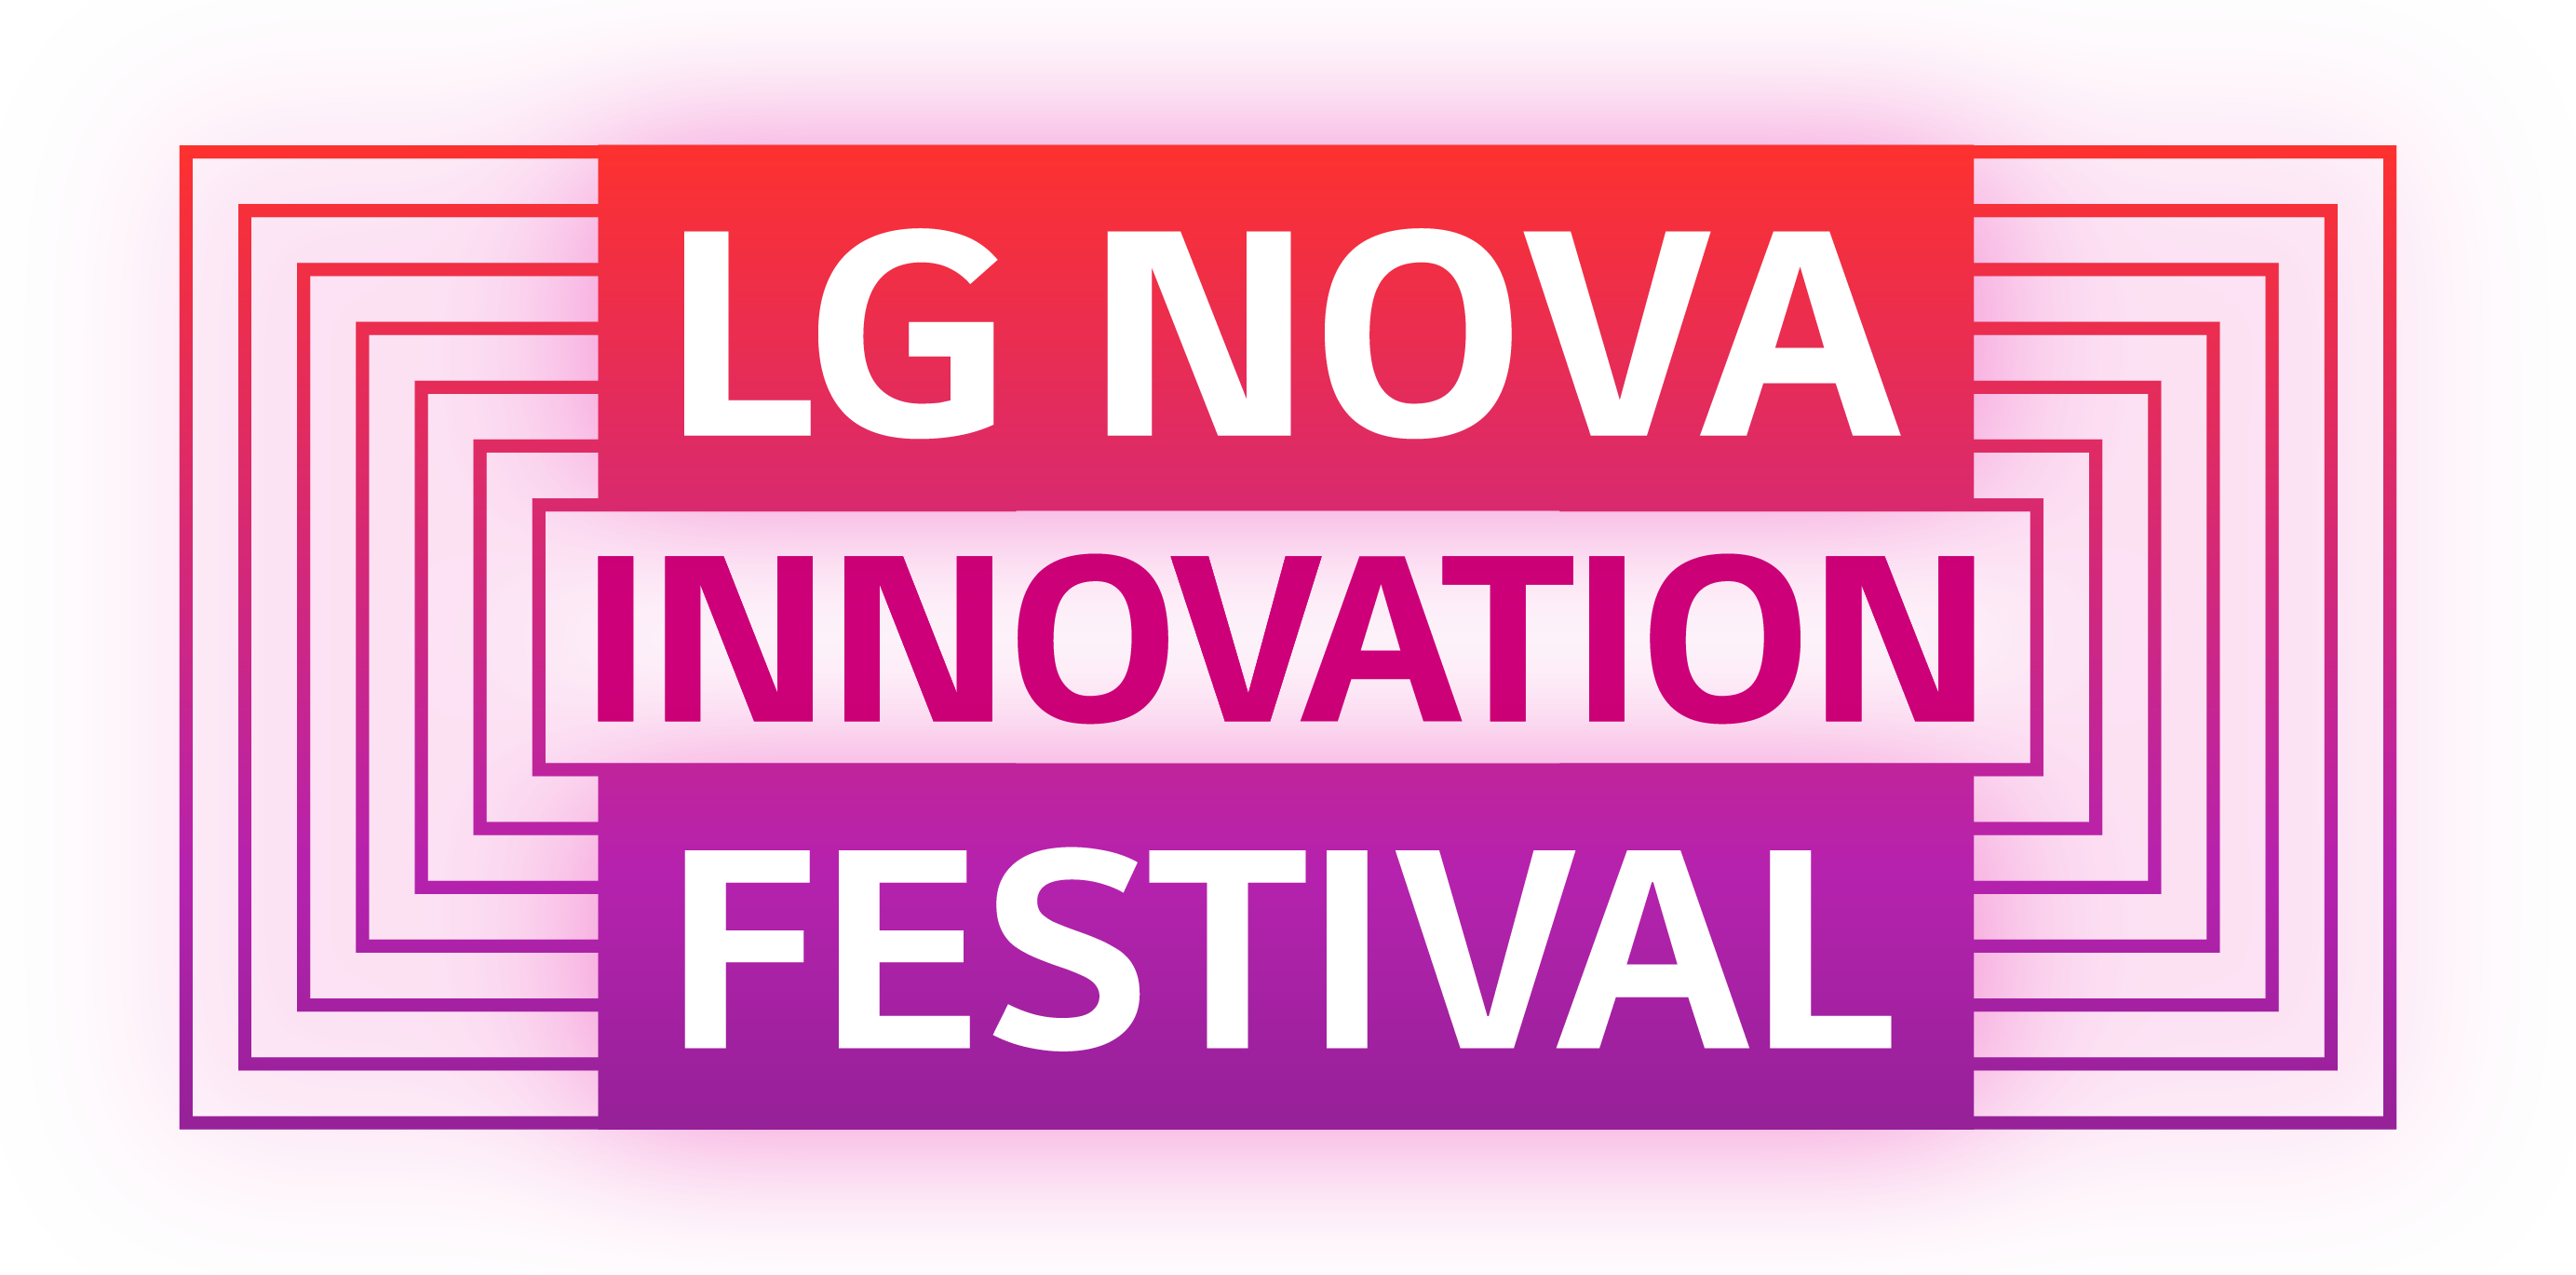 LG Nova Innovation Festival